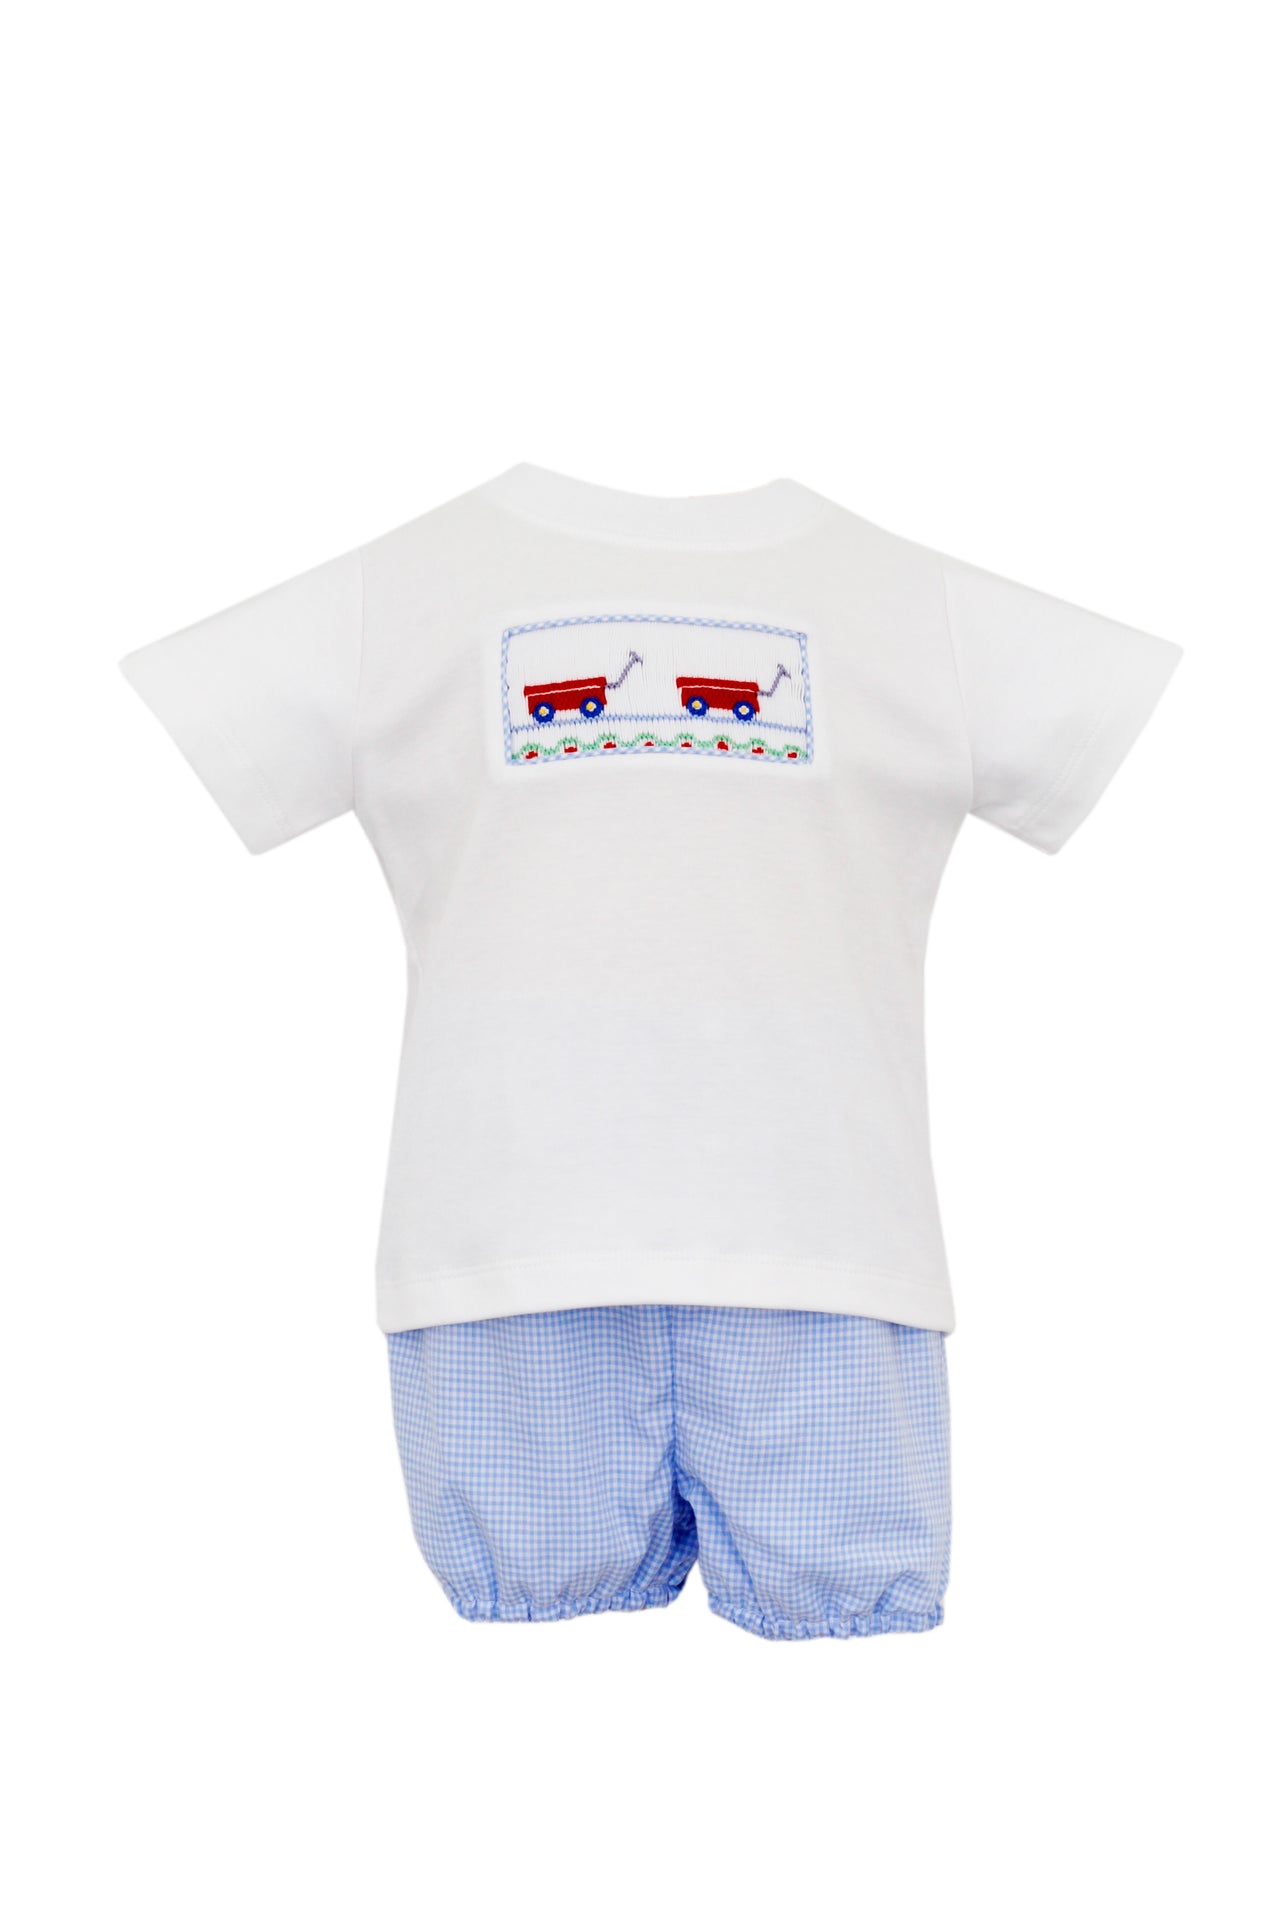 Petit Bebe Red Wagon Boy's White T-Shirt Bloomer Set Blue Gingham 132M-MS24 510